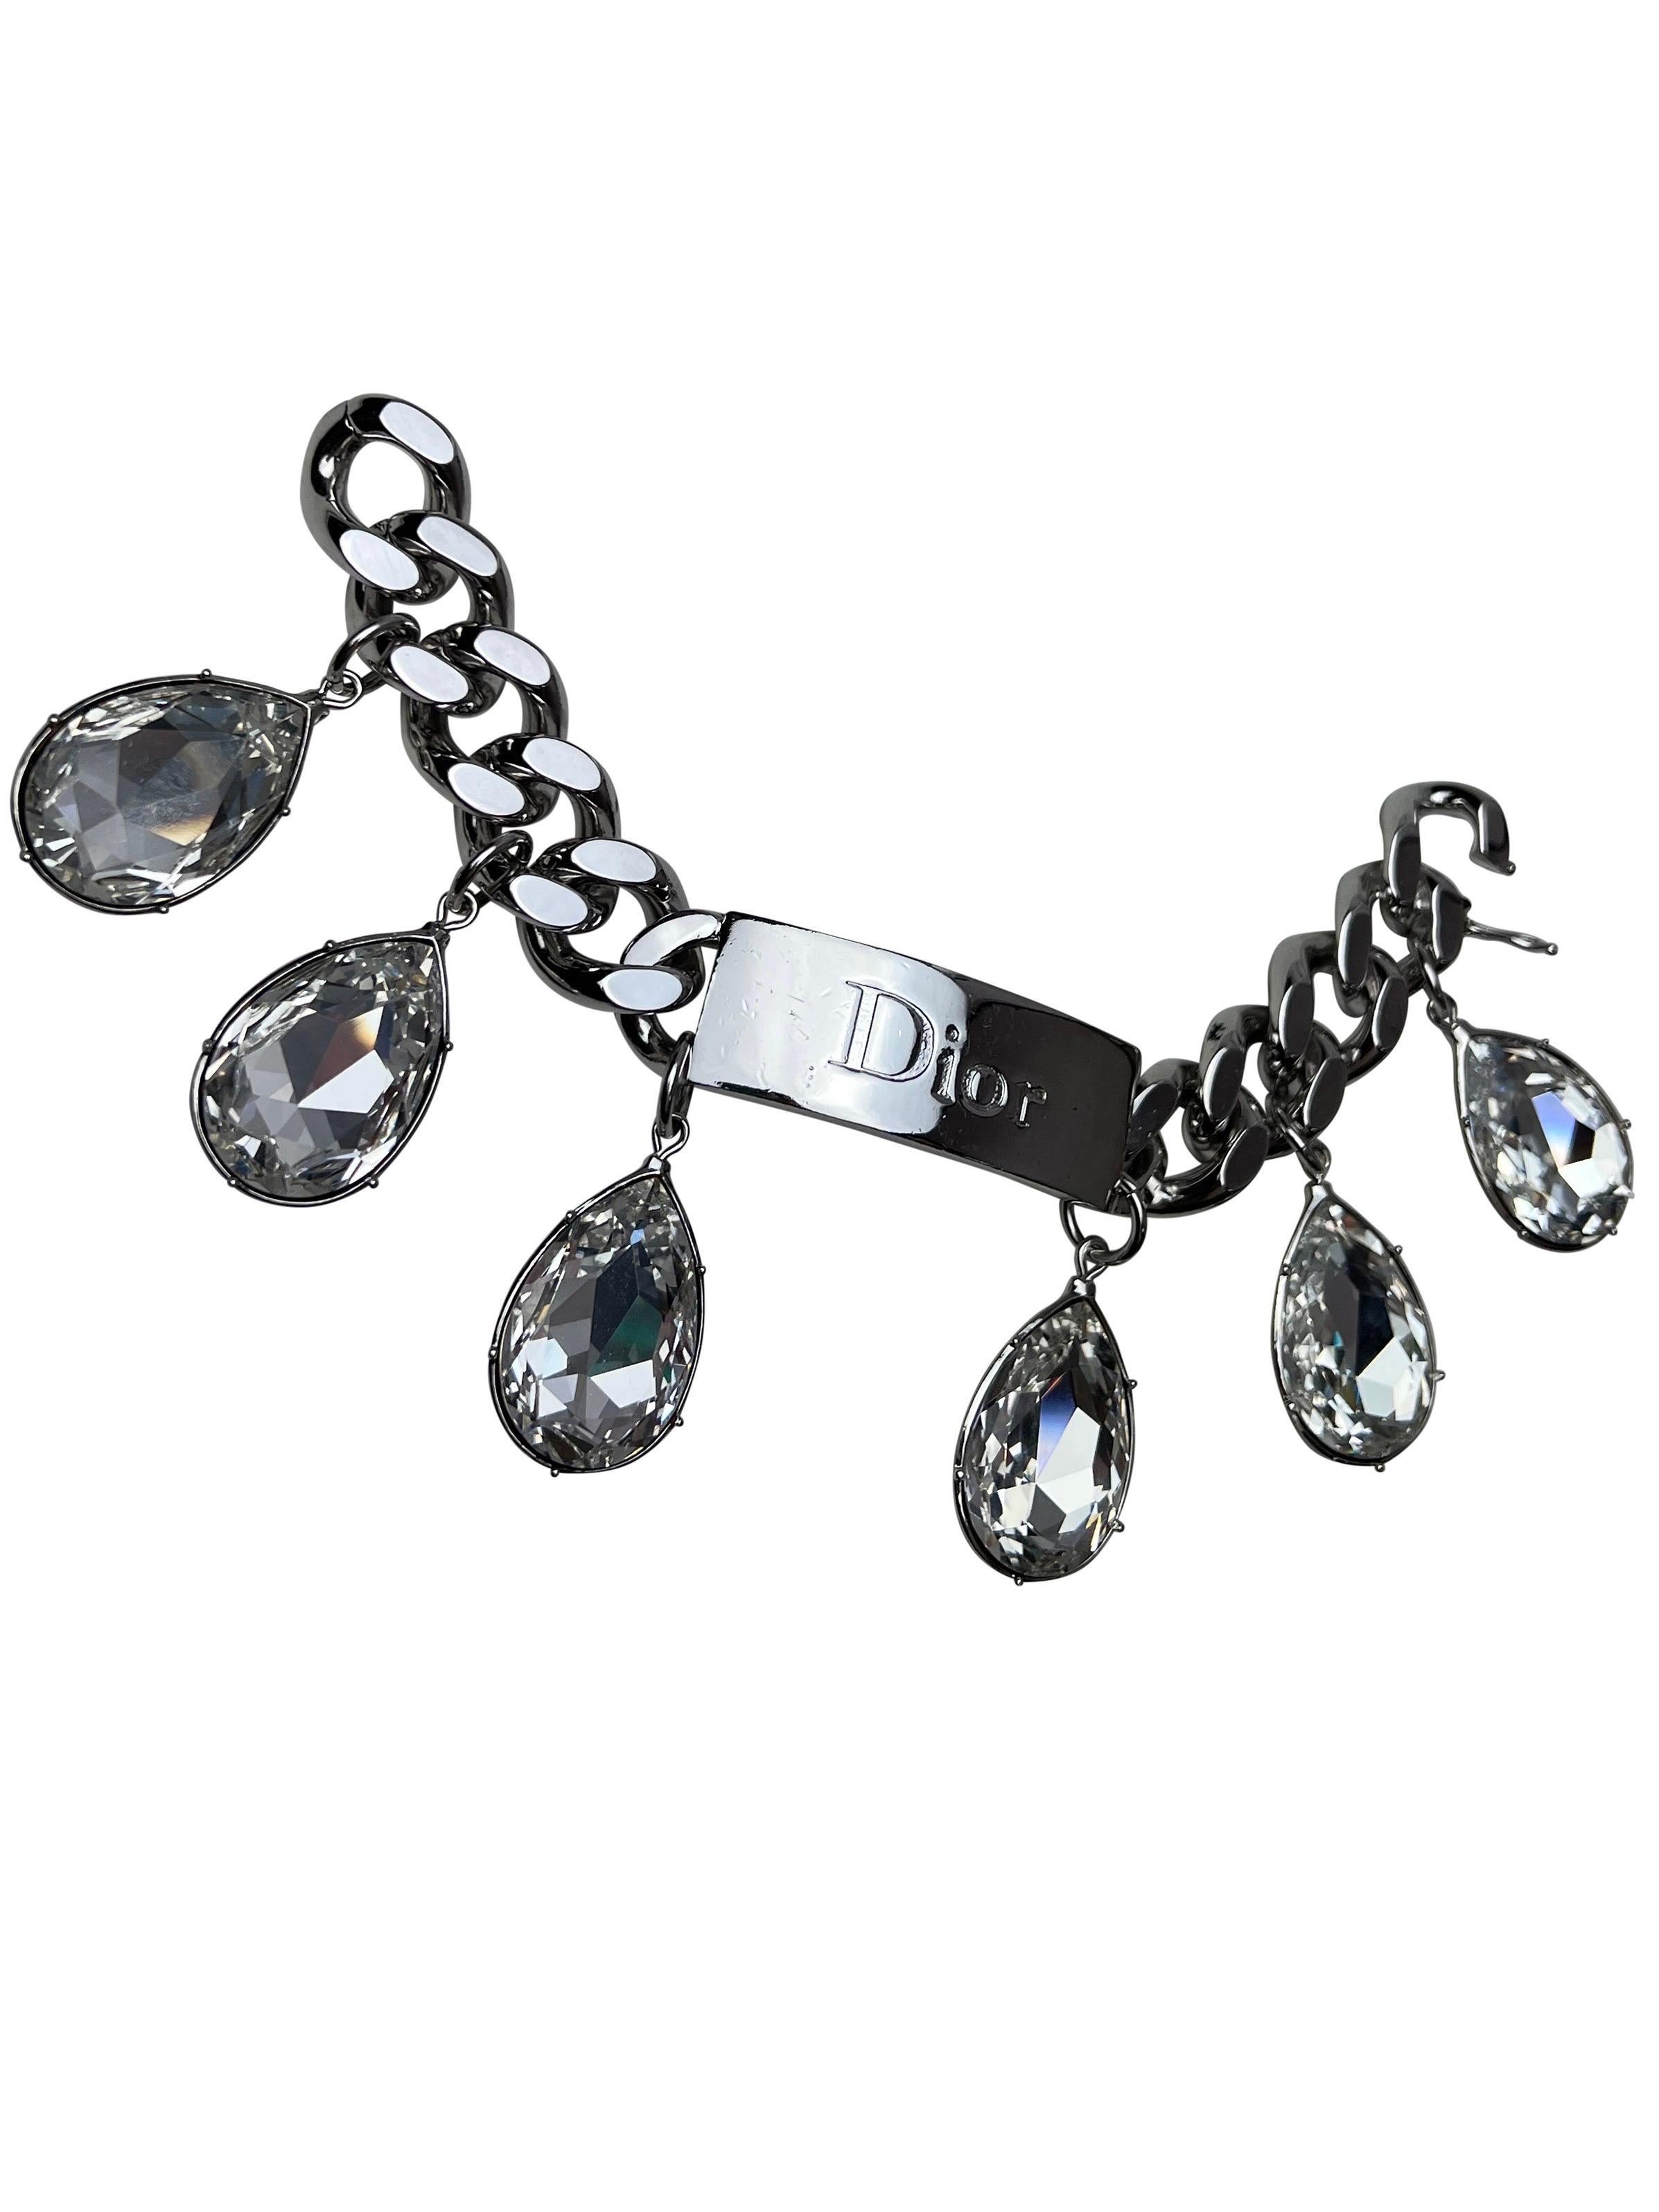 Dior by John Galliano Fall 2004 Swarovski Crystal Runway Bracelet For Sale 3